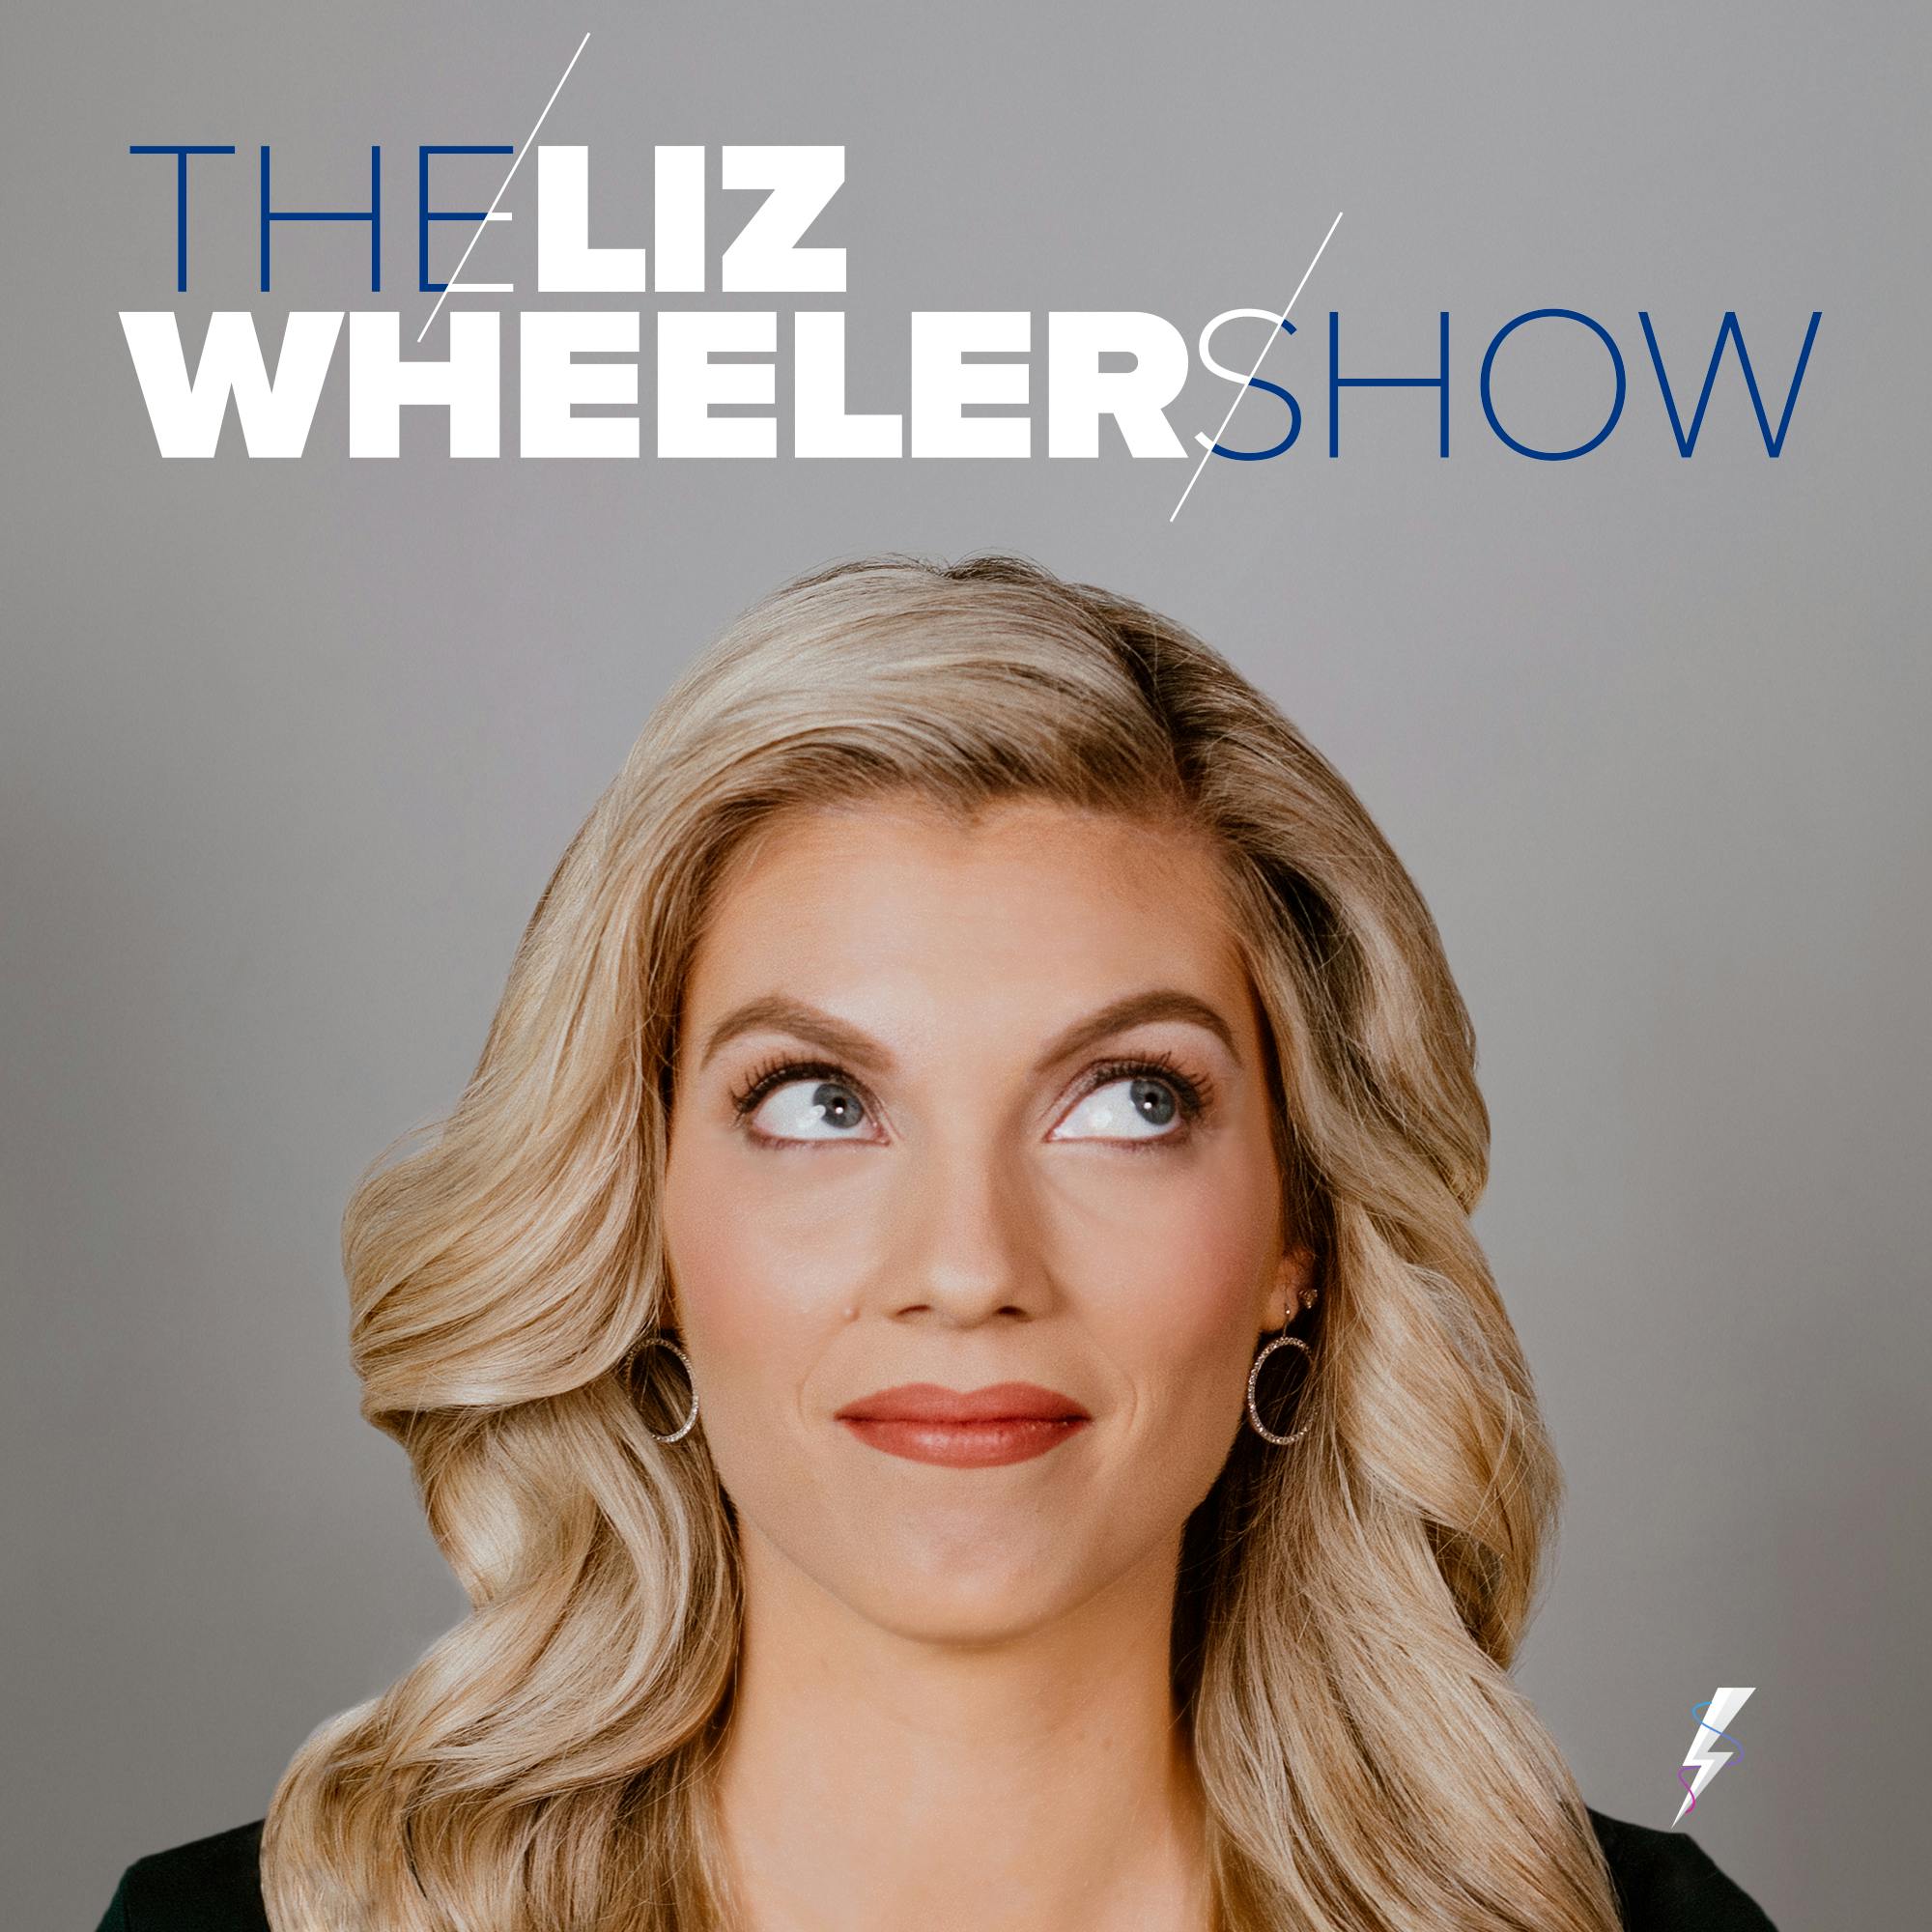 The Liz Wheeler Show